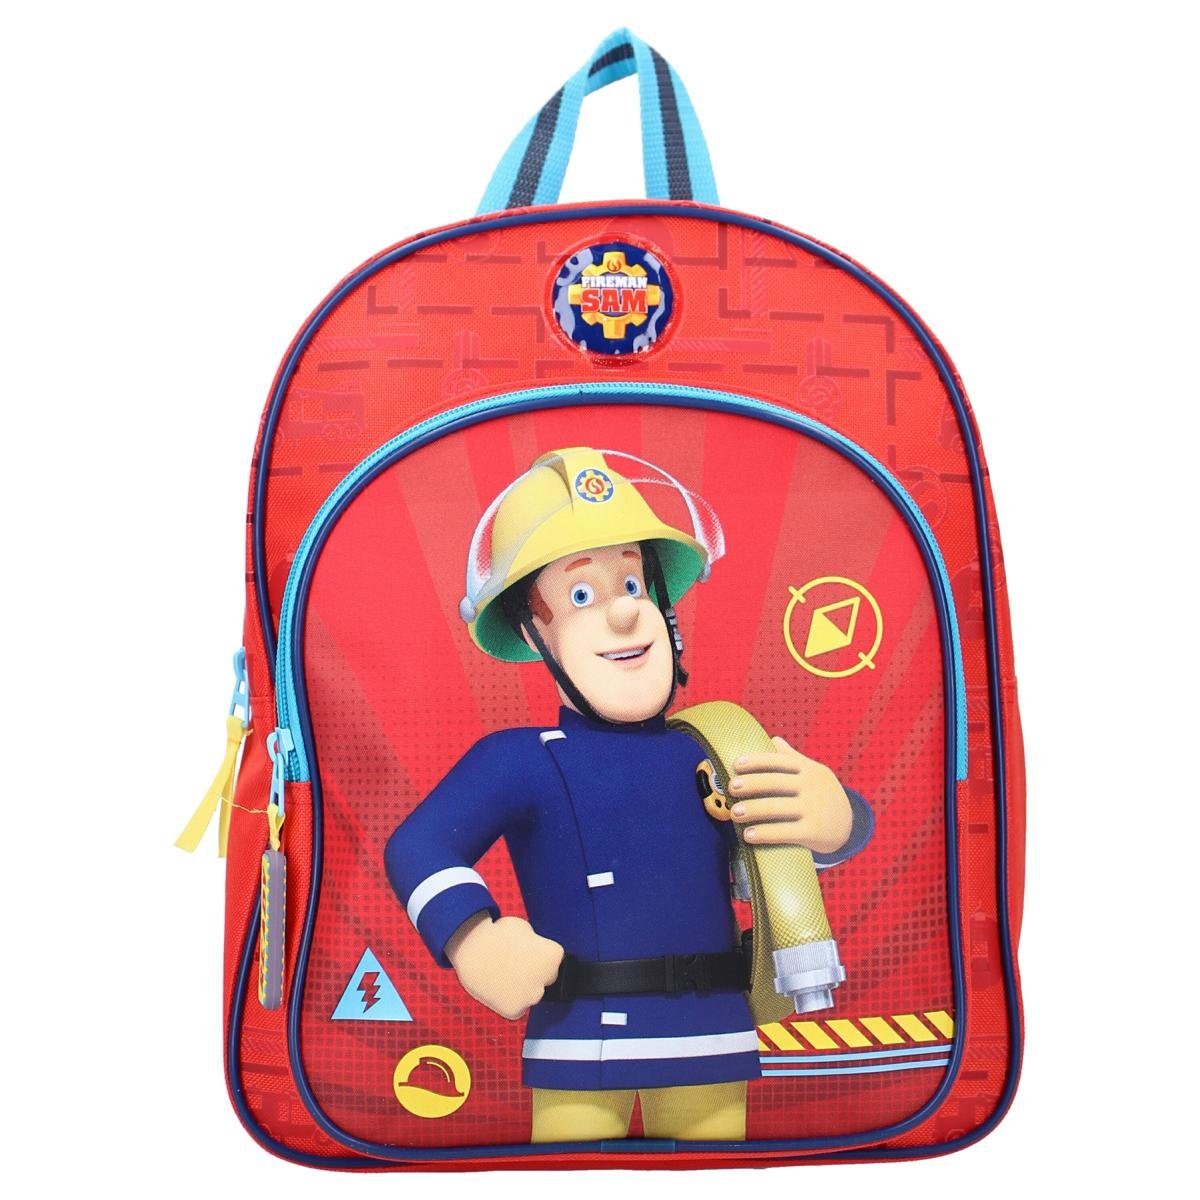 Freizeitrucksack Vadobag Kinderrucksack 8 Liter Sam, Feuerwehrmann Kindermotiv